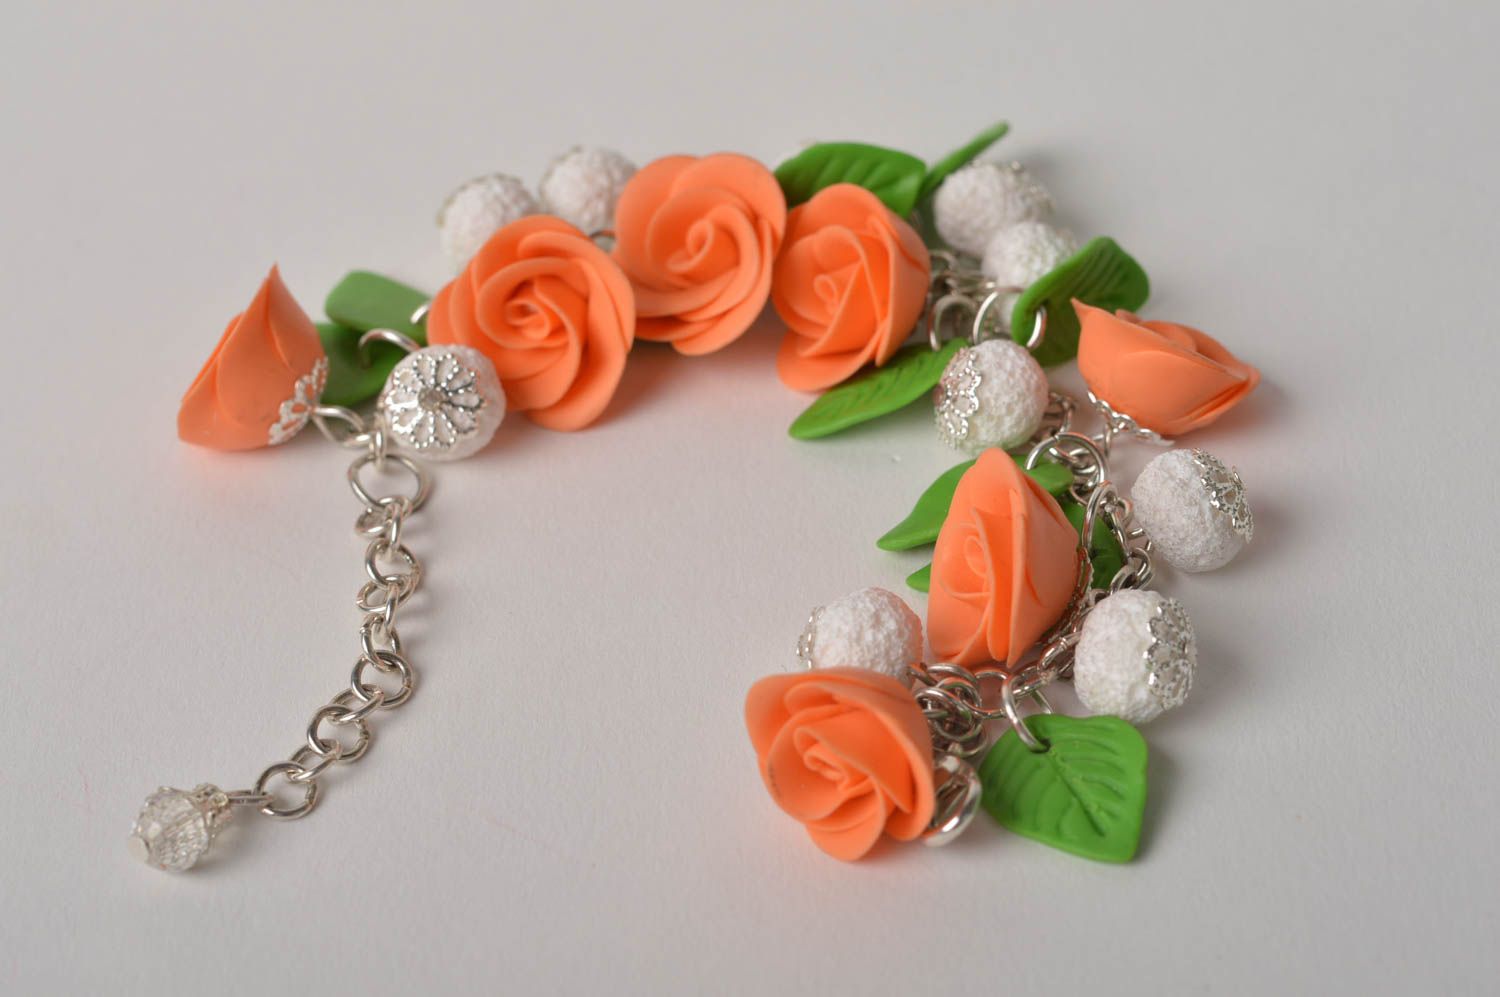 Beautiful handmade plastic bracelet flower wrist bracelet jewelry designs photo 5